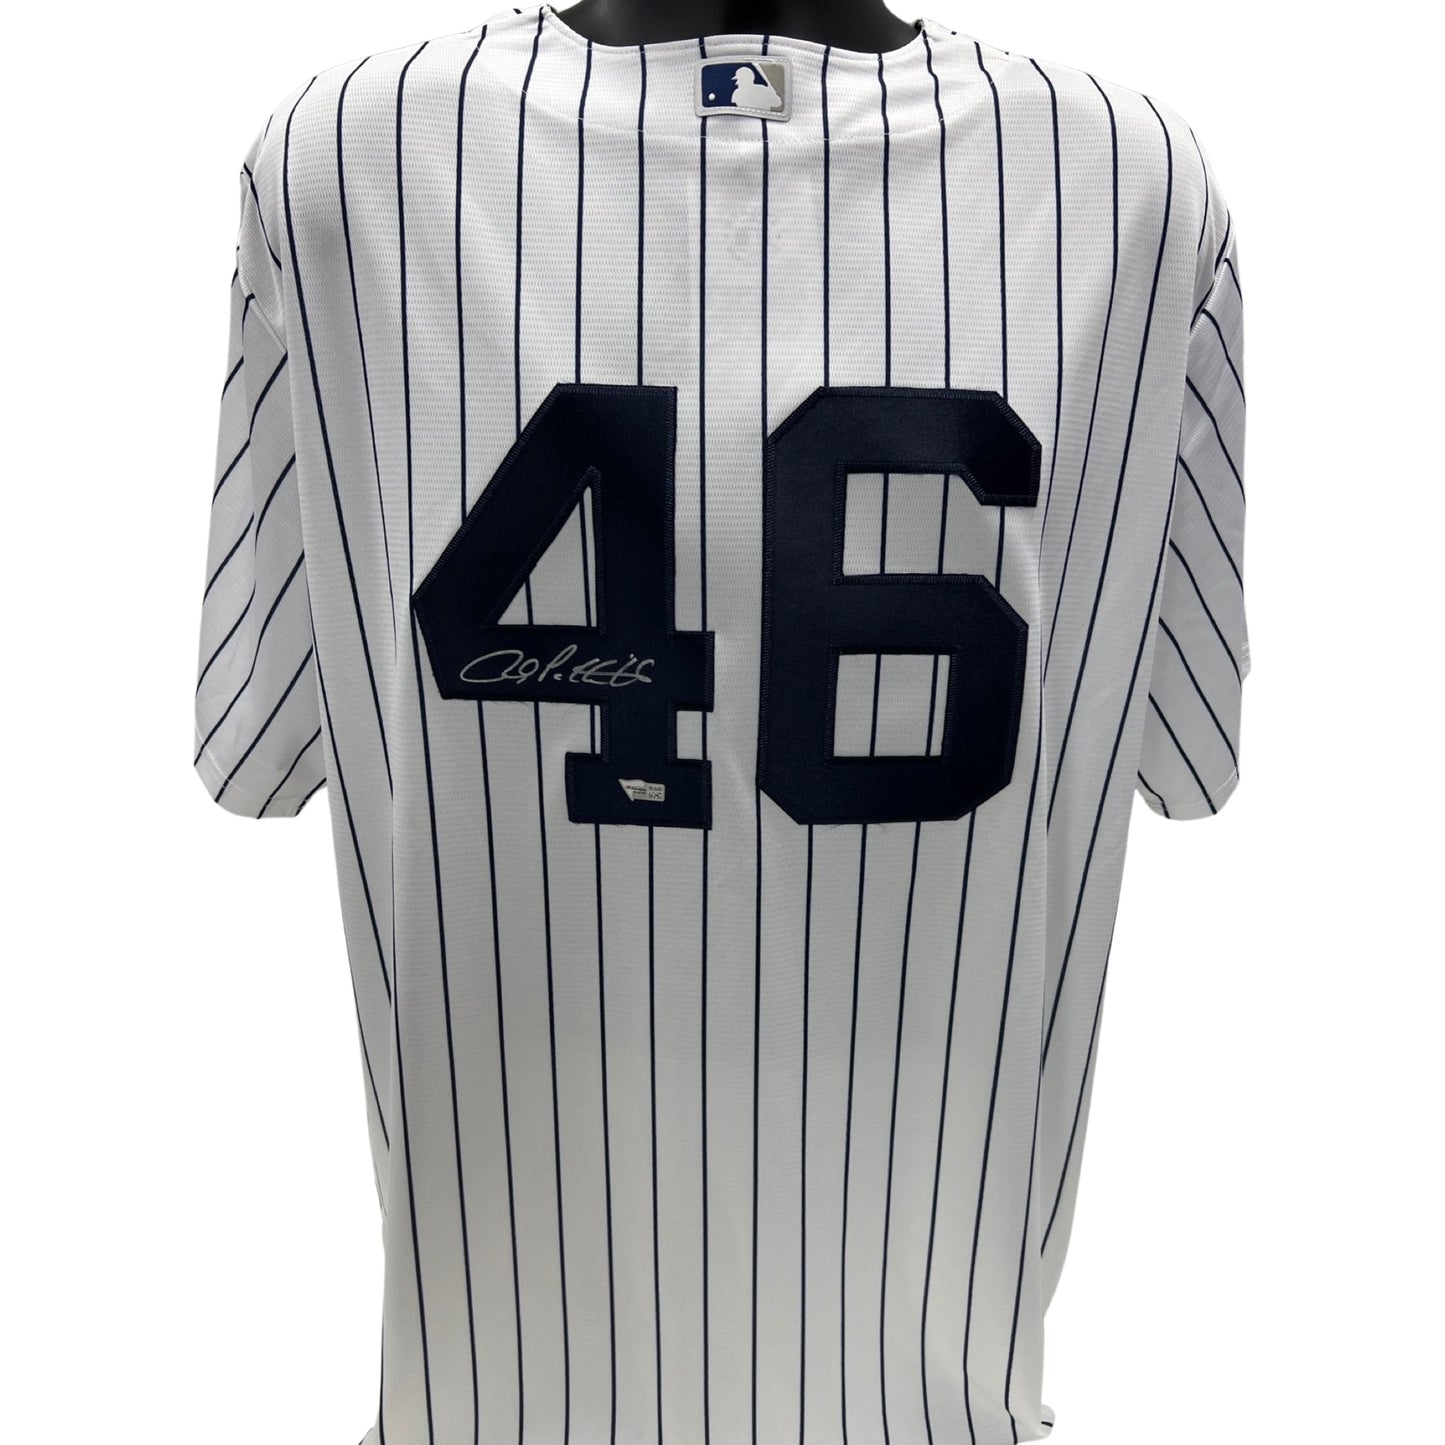 Andy Pettitte Autographed New York Yankees Majestic Pinstripe Jersey Fanatics